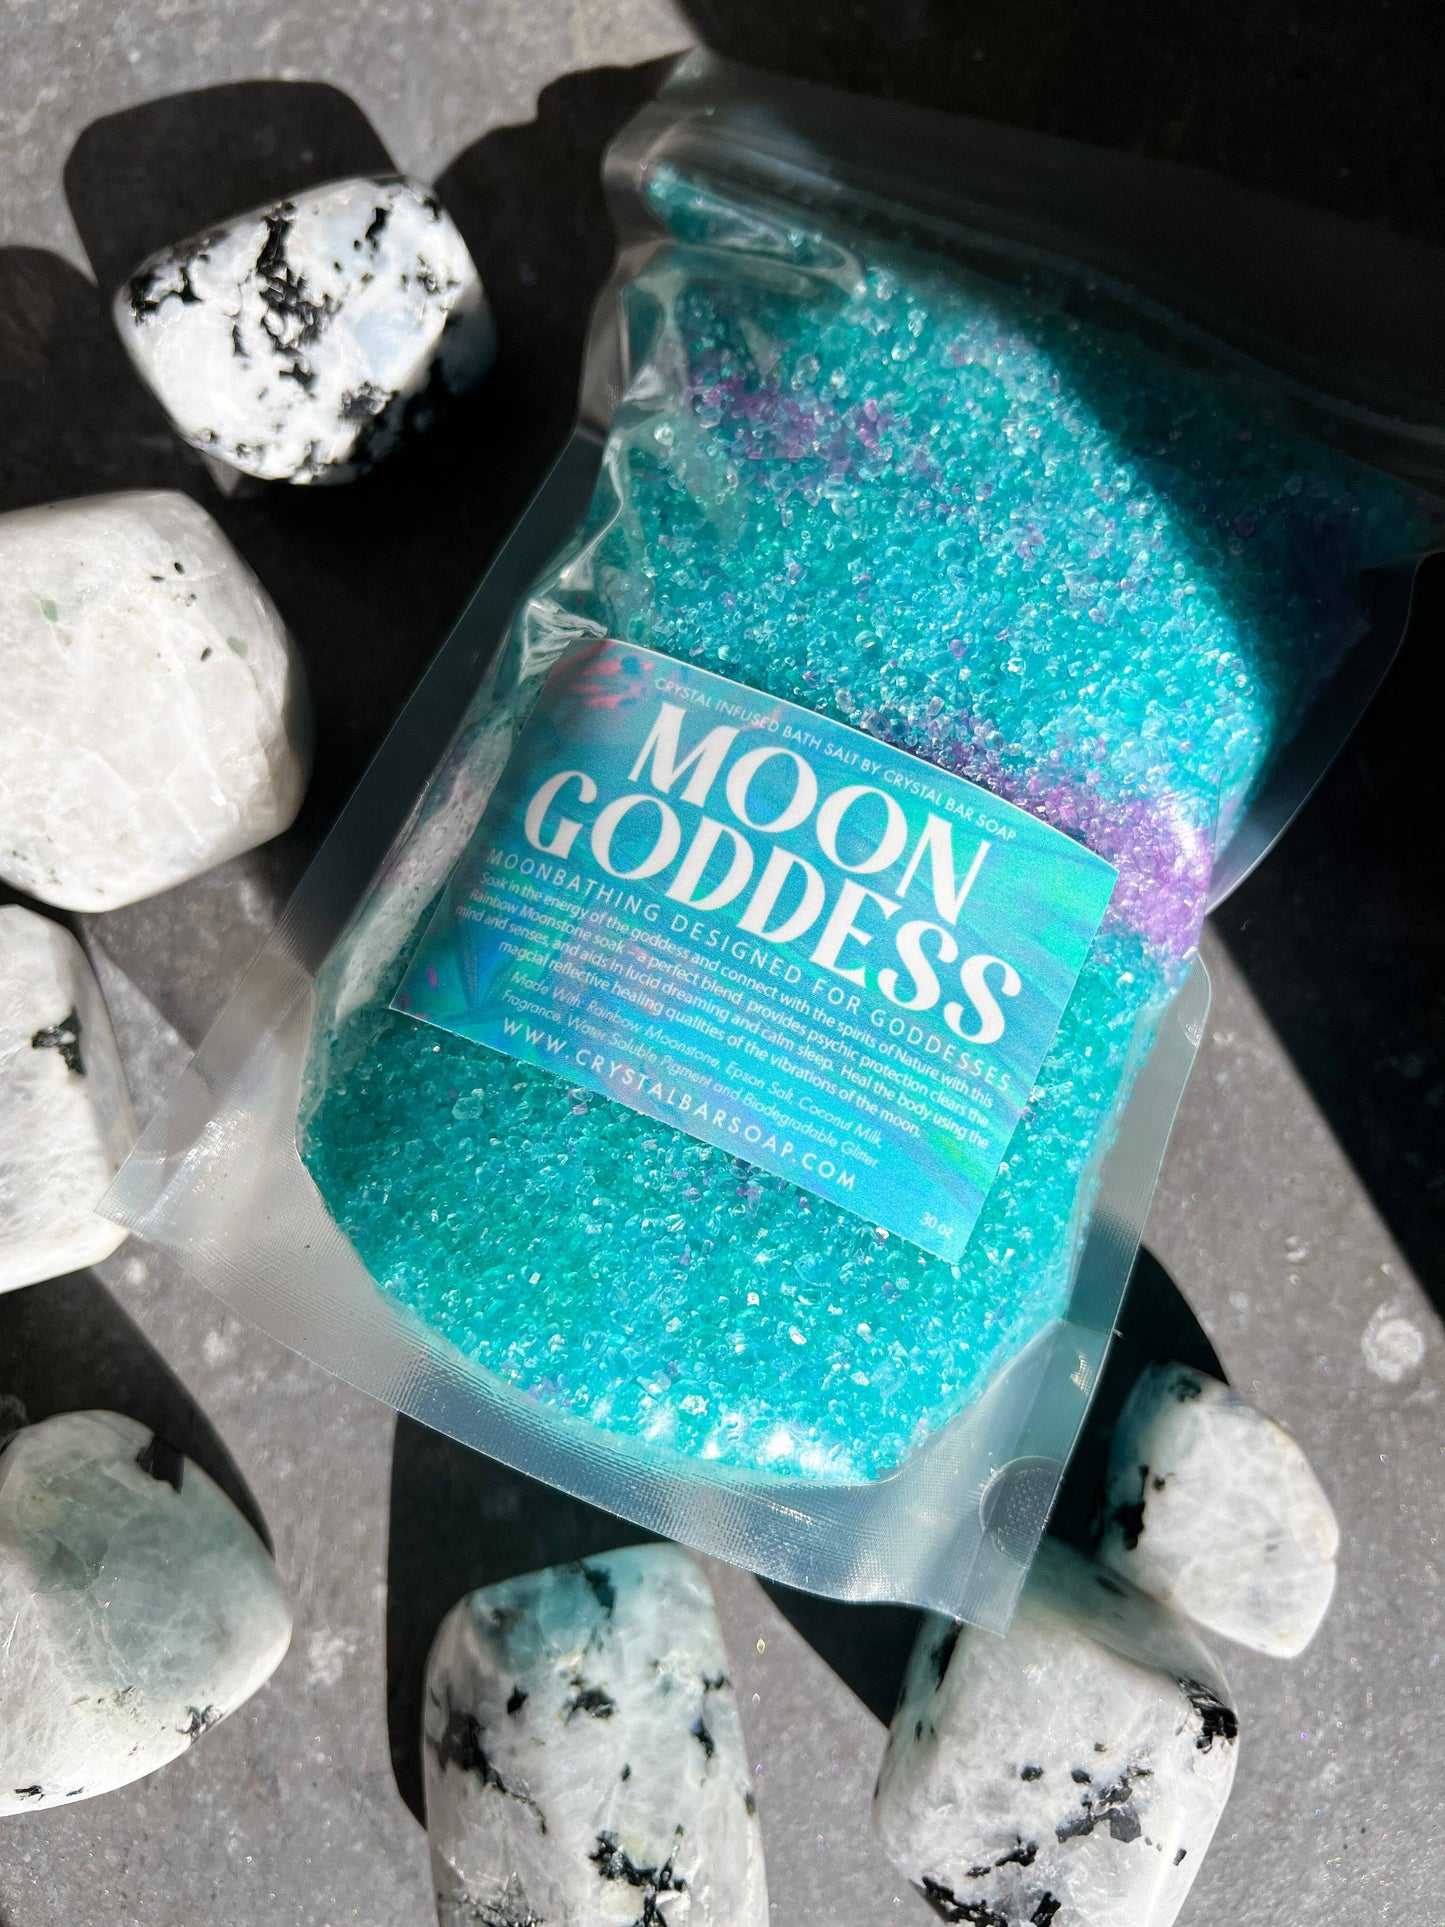 Moon Goddess - 30 oz Crystal Infused Bath Salt